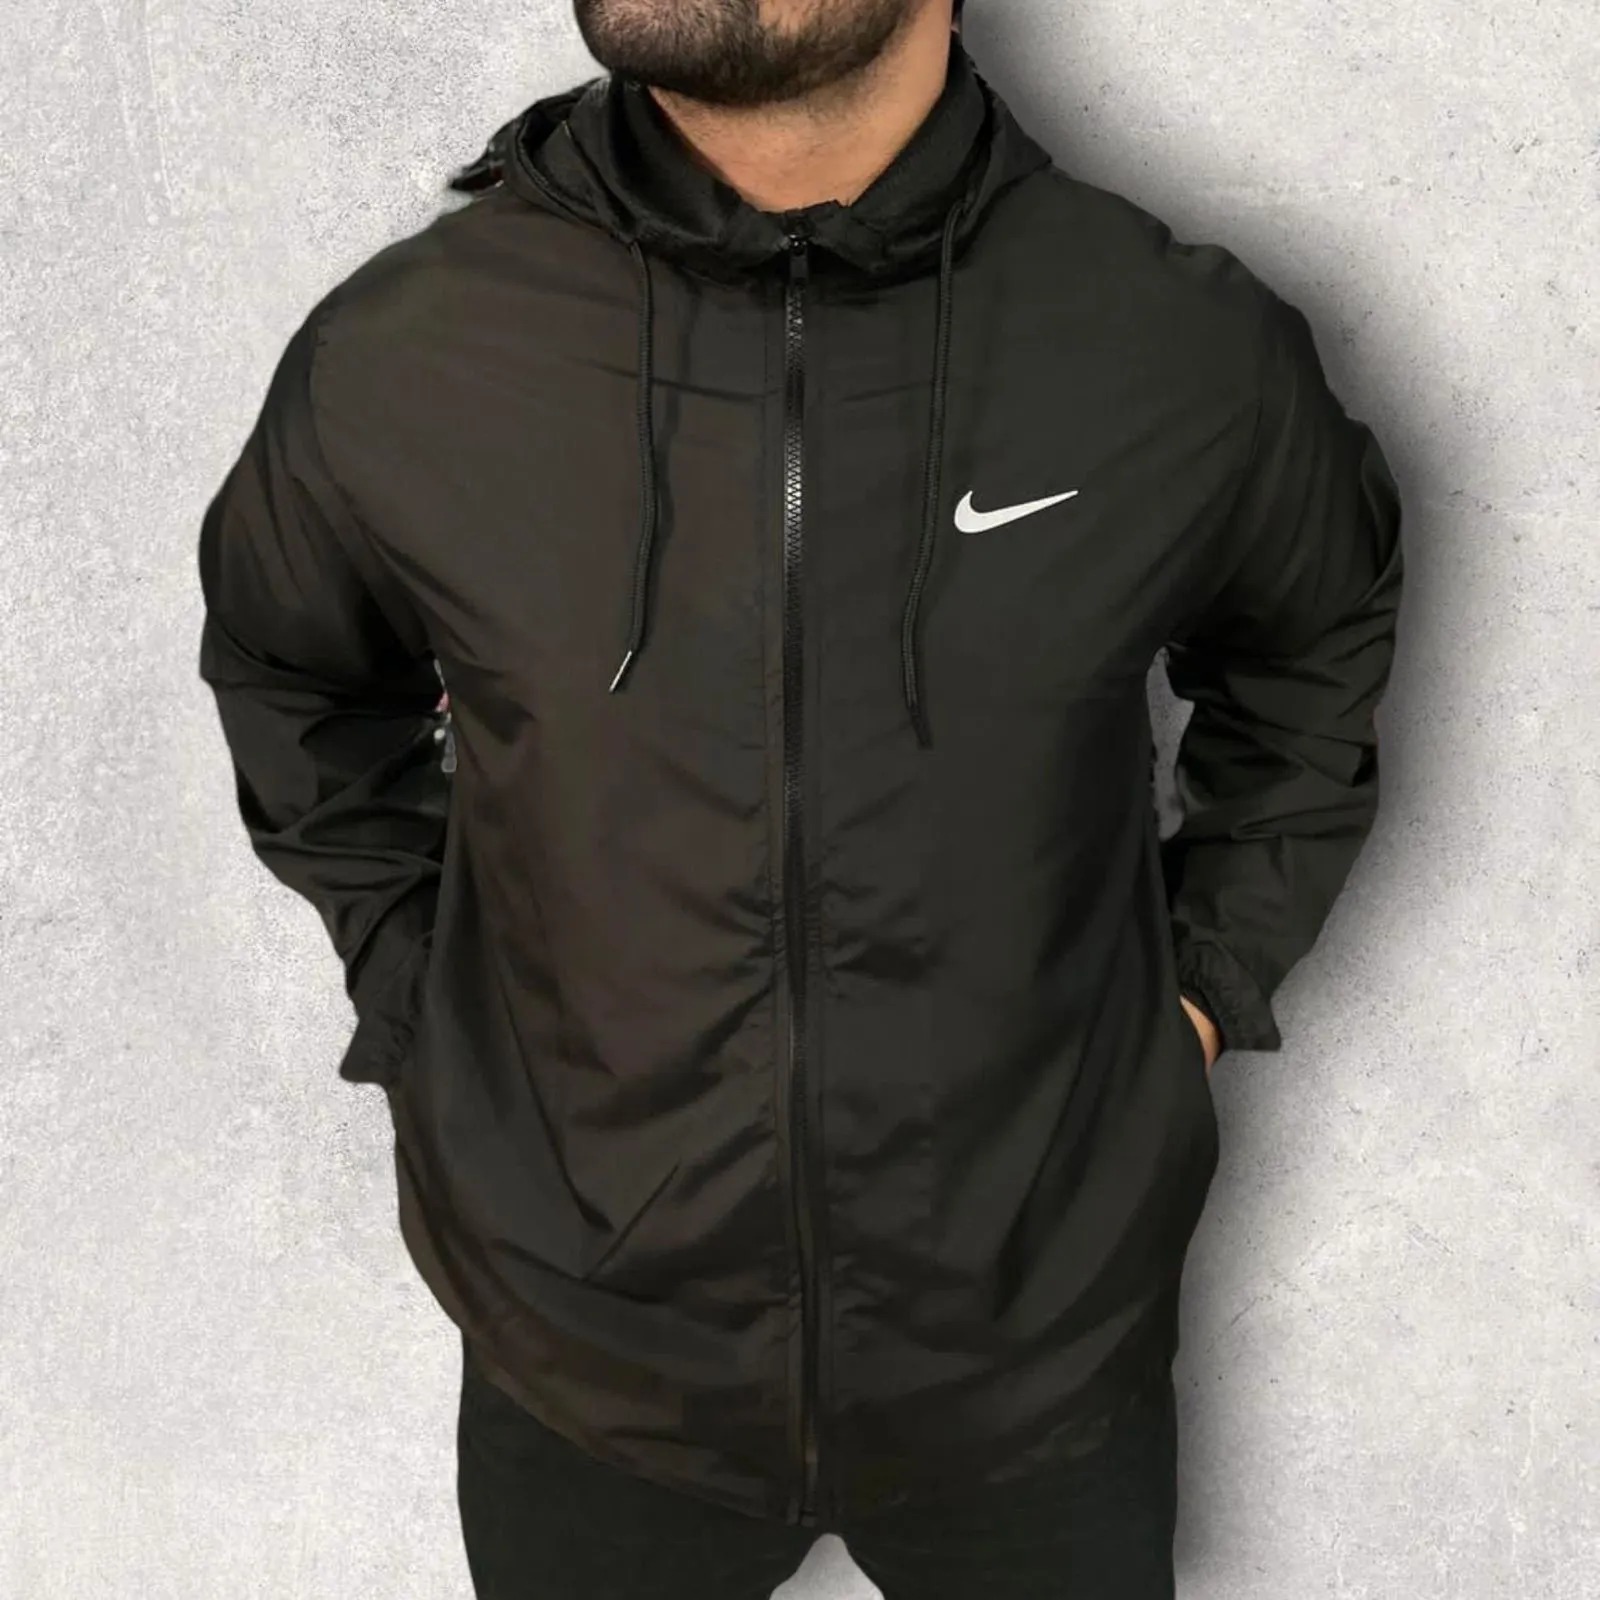 Casaco Refletivo Nike Preto - Mejk modas